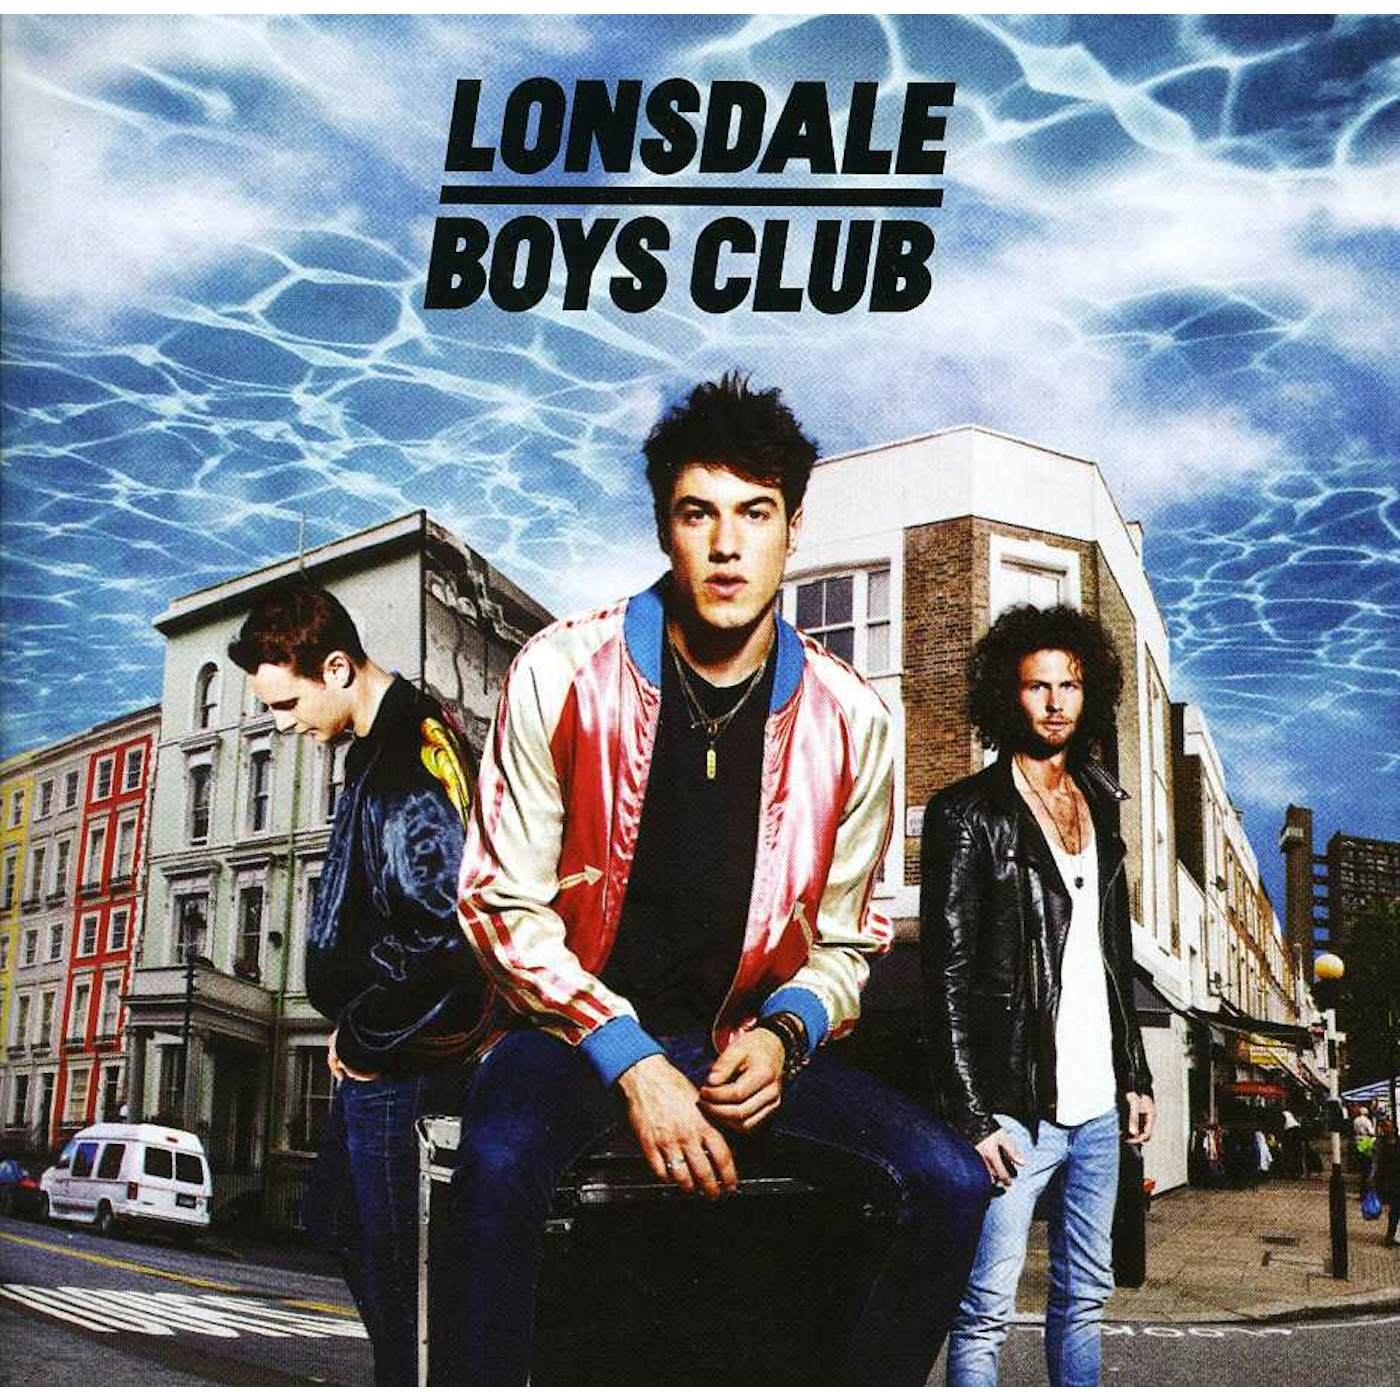 LONSDALE BOYS CLUB CD